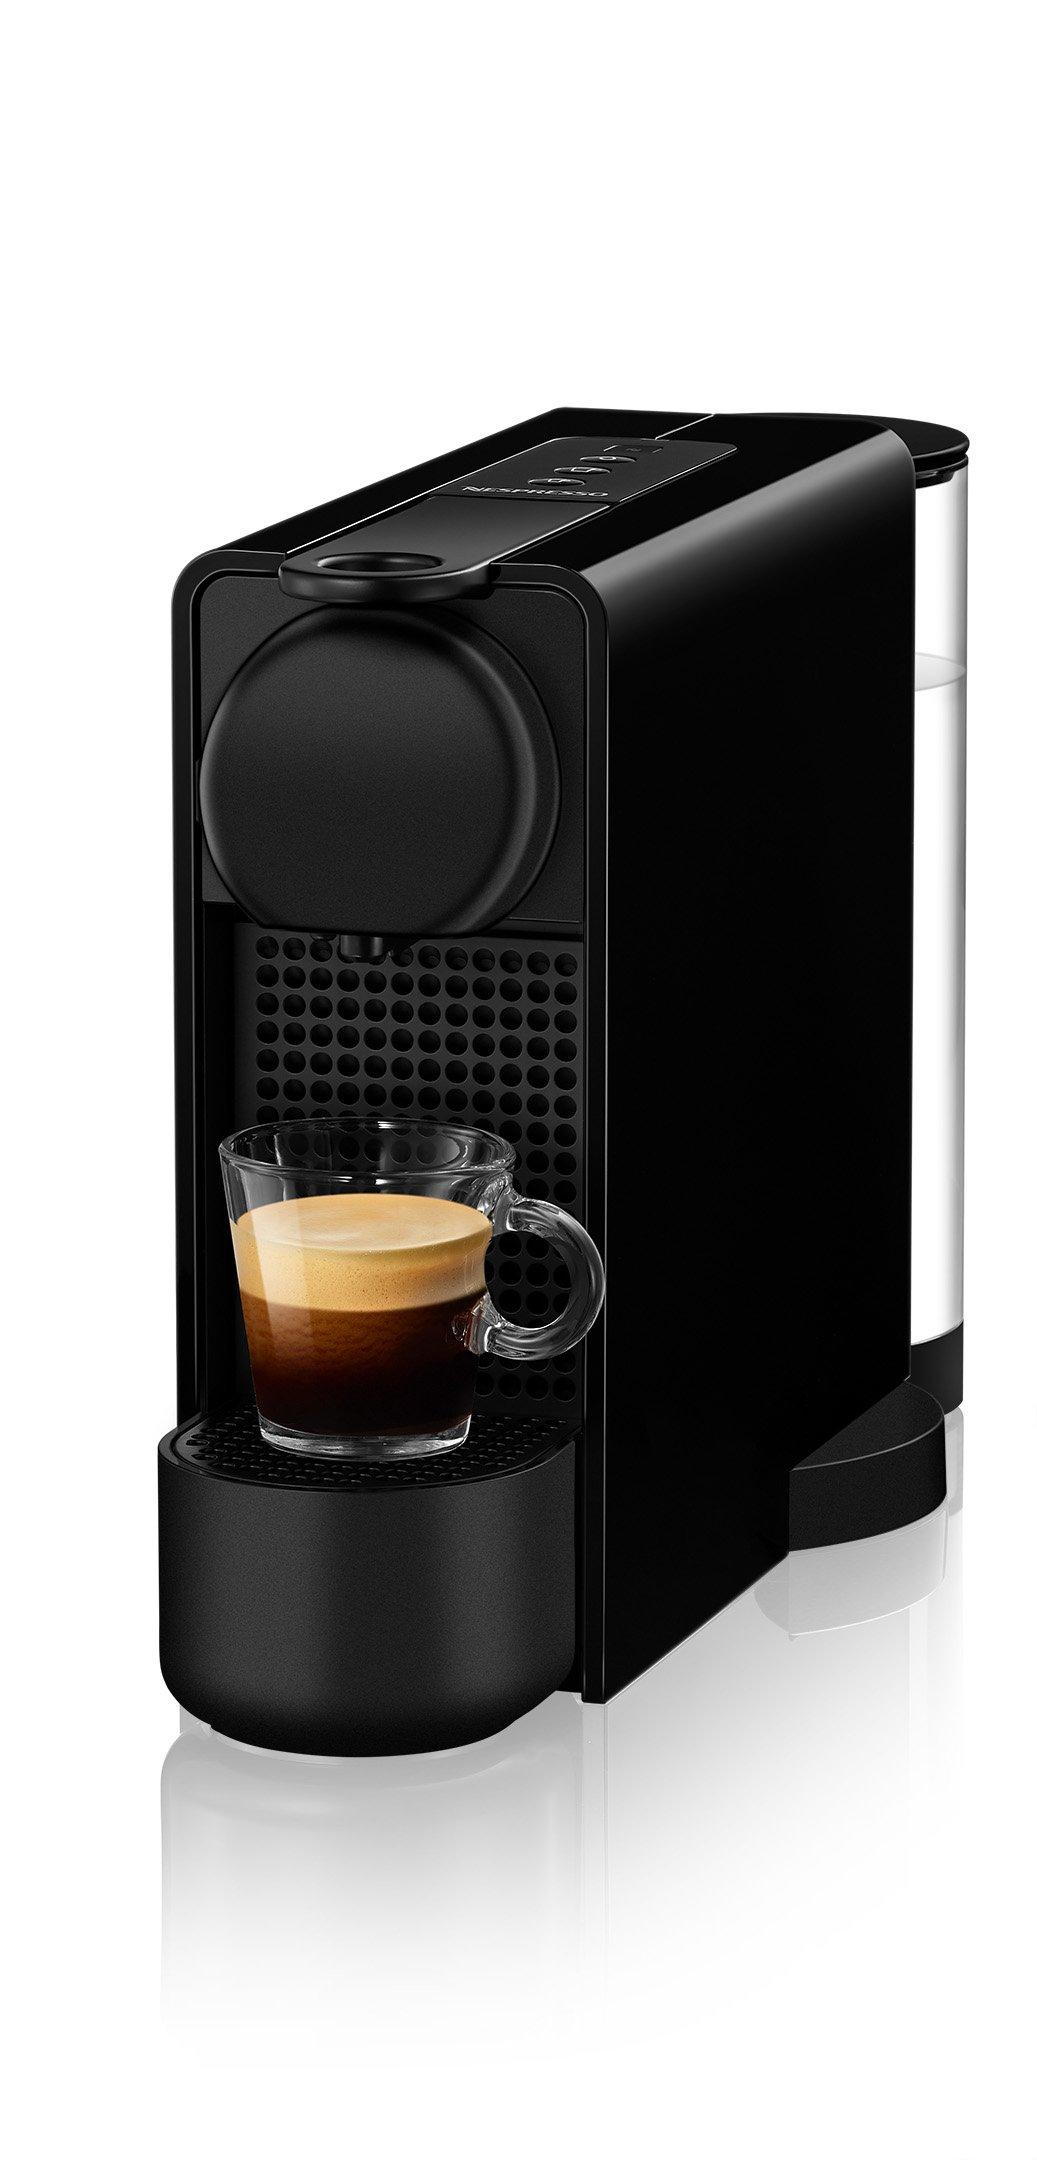 Nespresso, 1.0L Automatic Espresso Coffee Machine, Limousine Black eXtra Bahrain